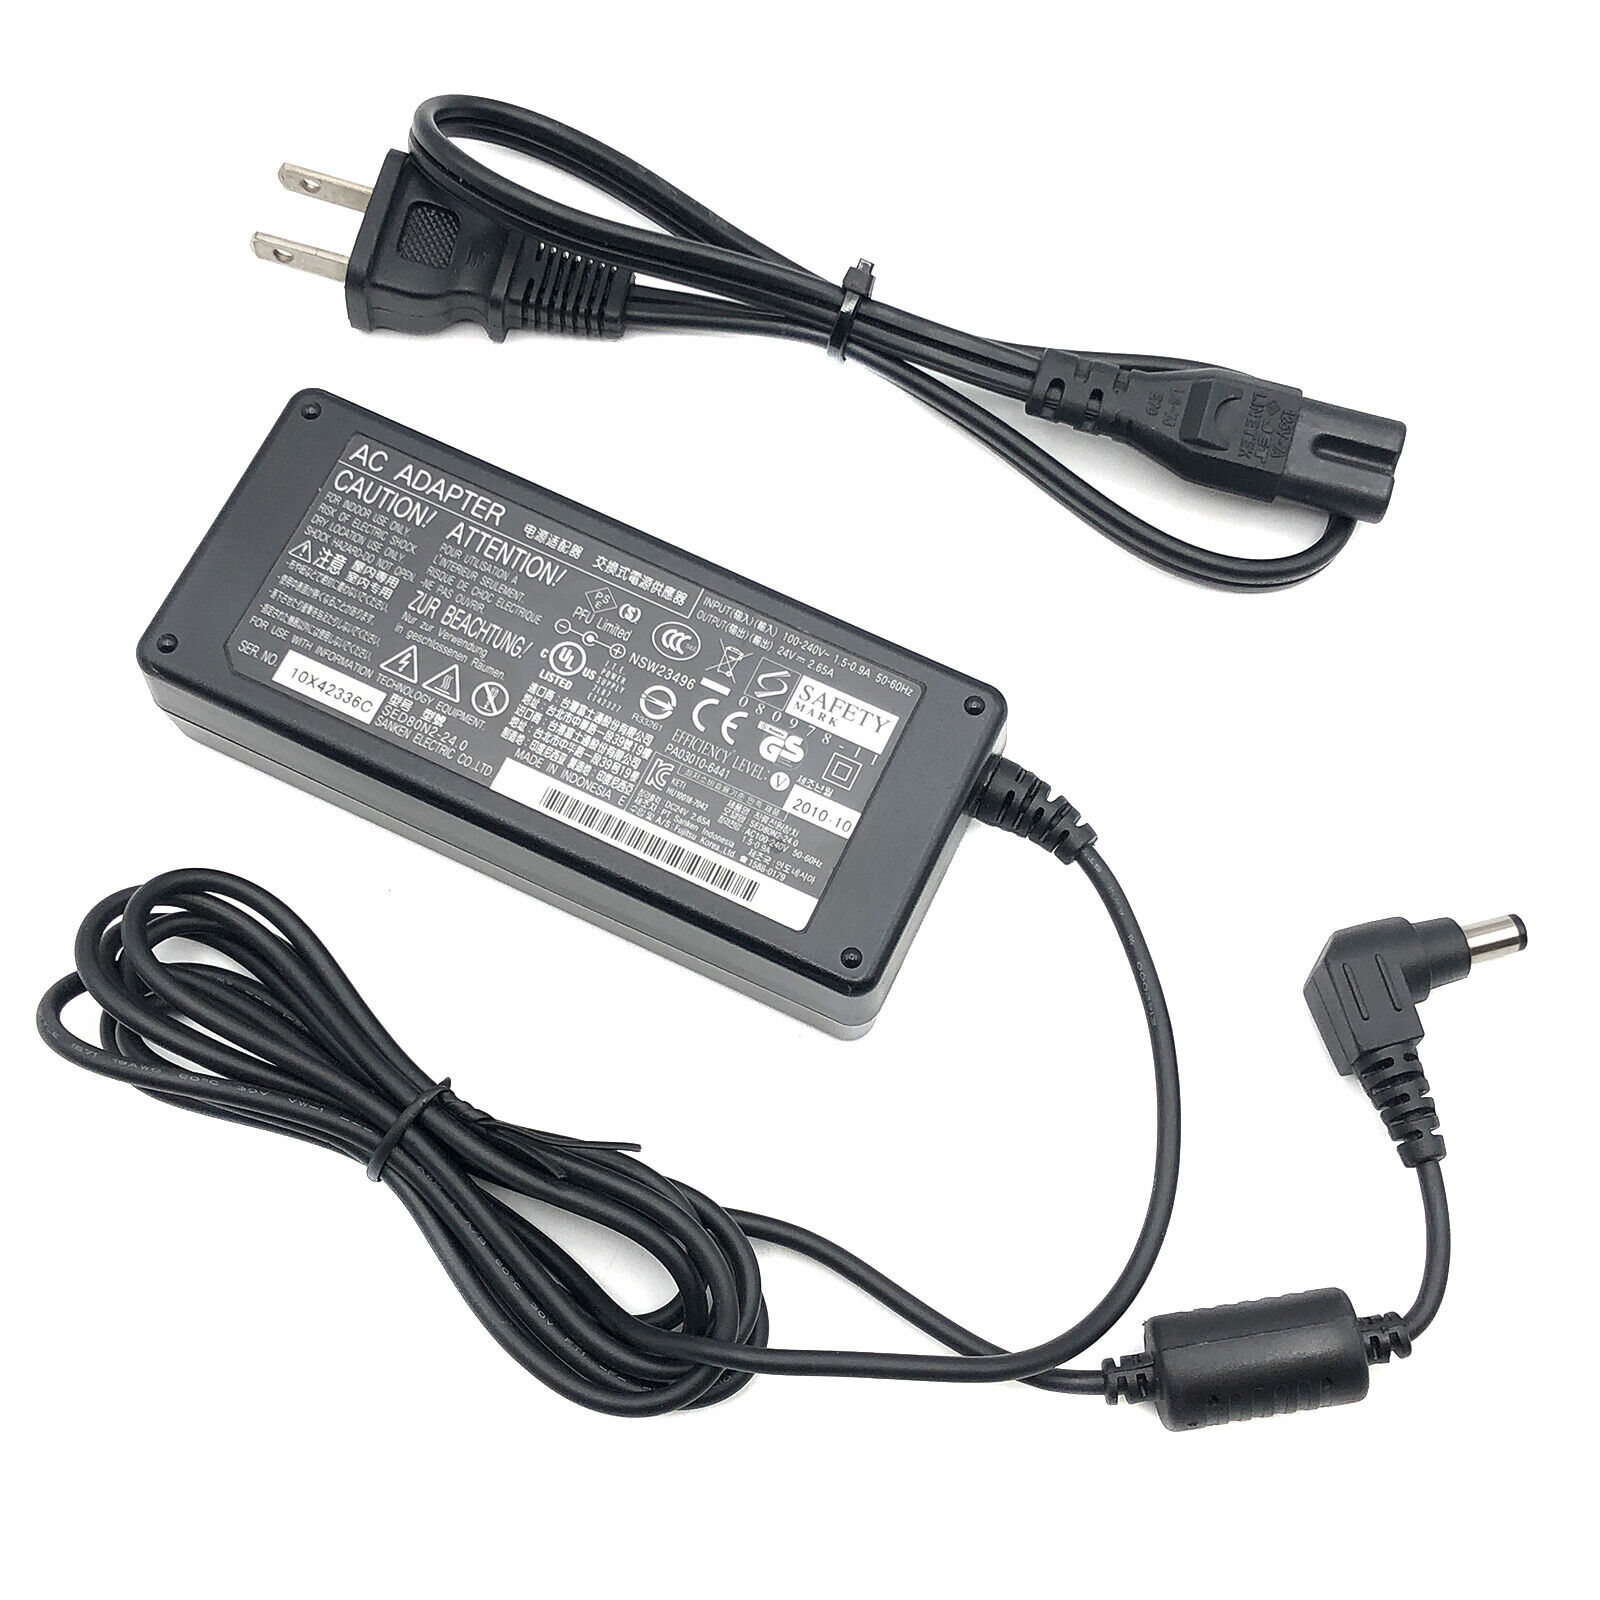 Genuine Fujitsu AC Adapter 24V for fi-7160 fi-7260 Scanner Power Supply Cord OEM